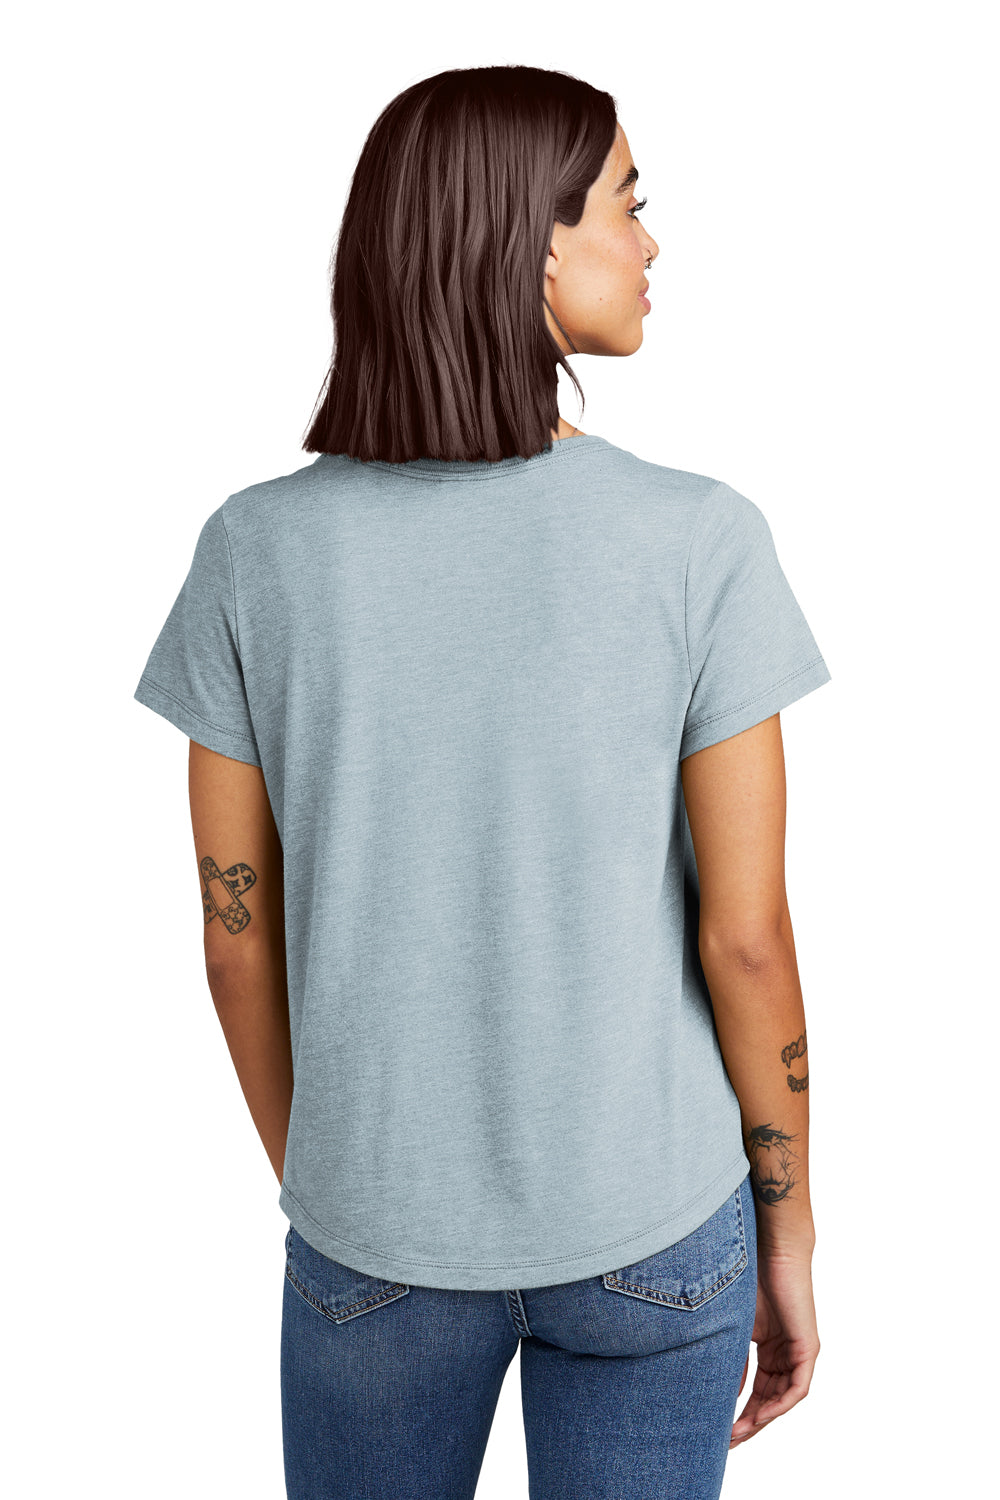 Allmade AL2015 Womens Short Sleeve Scoop Neck T Shirt I Like You Blue Model Back